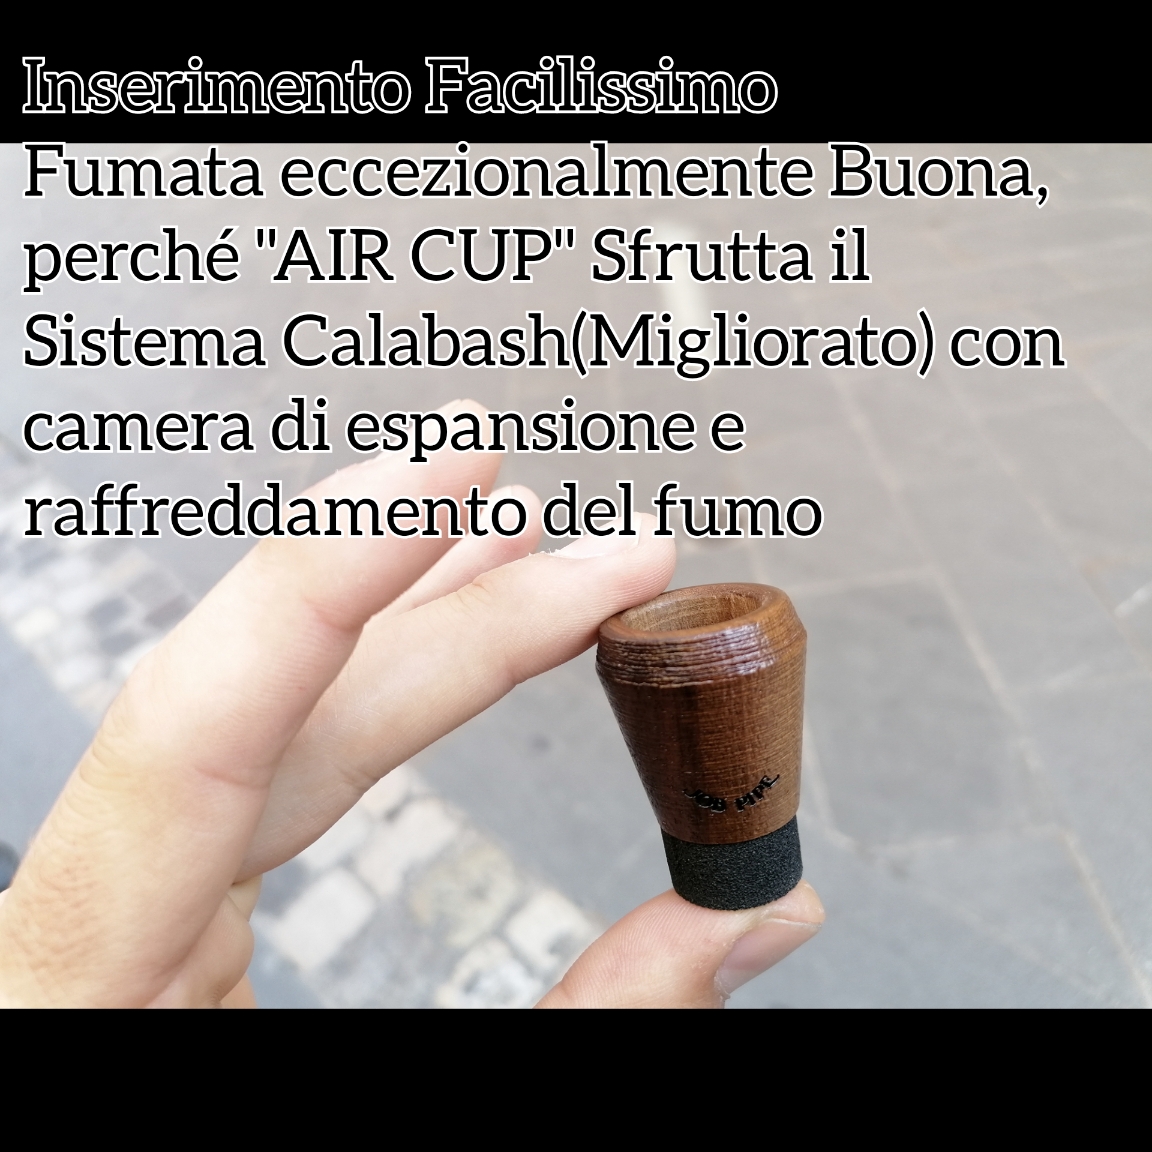 Job Pipe Air Cup "Imbuia" (Note di Pepe)    Size "L o S"